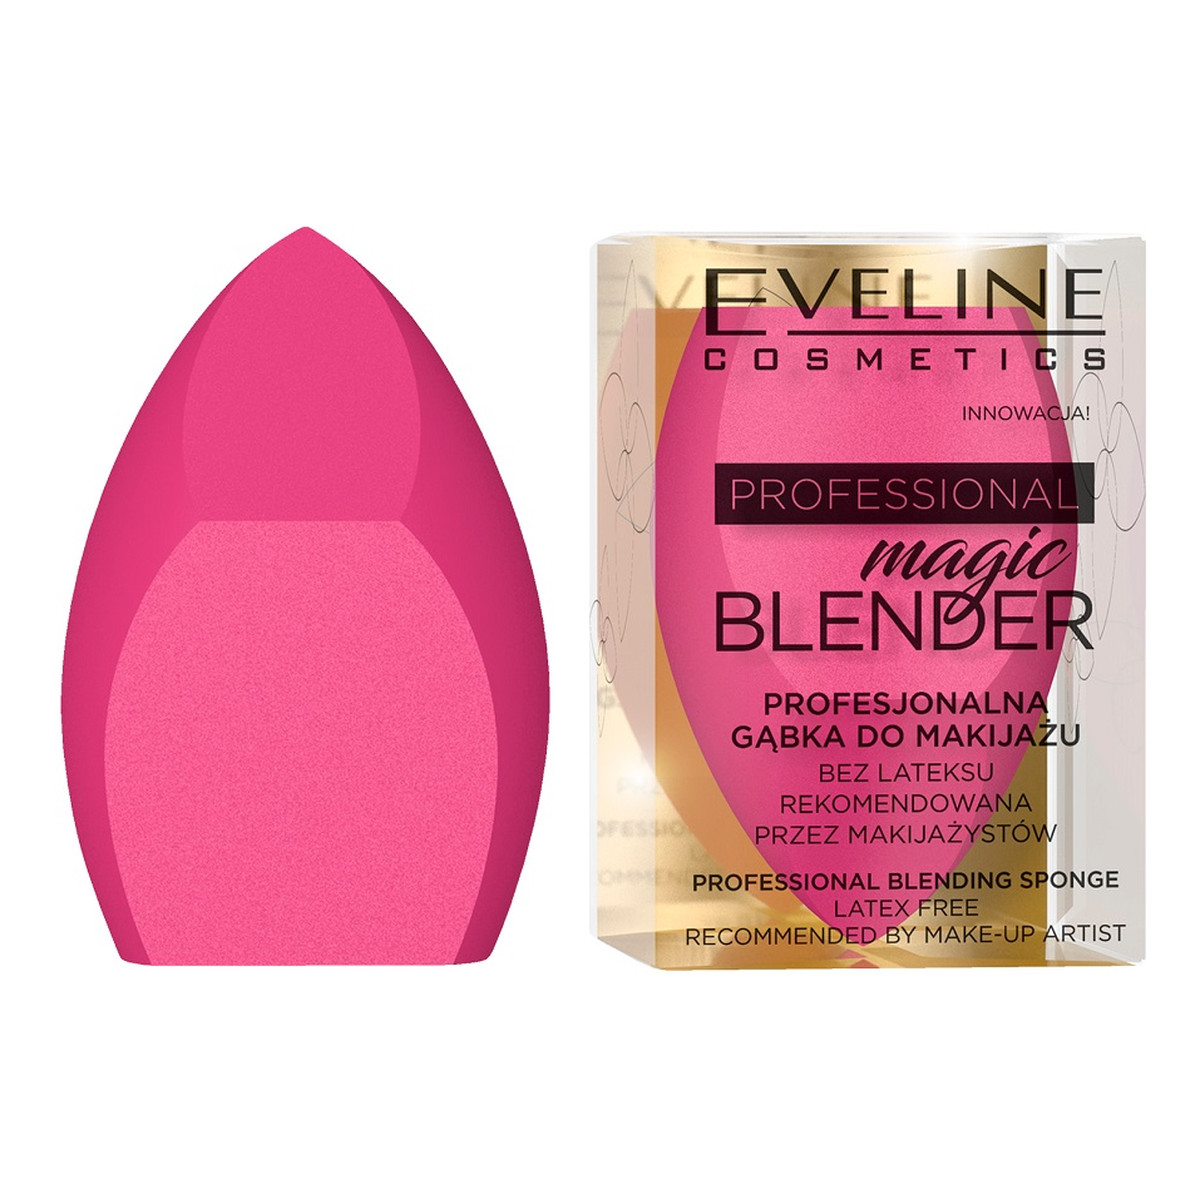 Eveline Professional Magic Blender Profesjonalna gąbka do makijażu